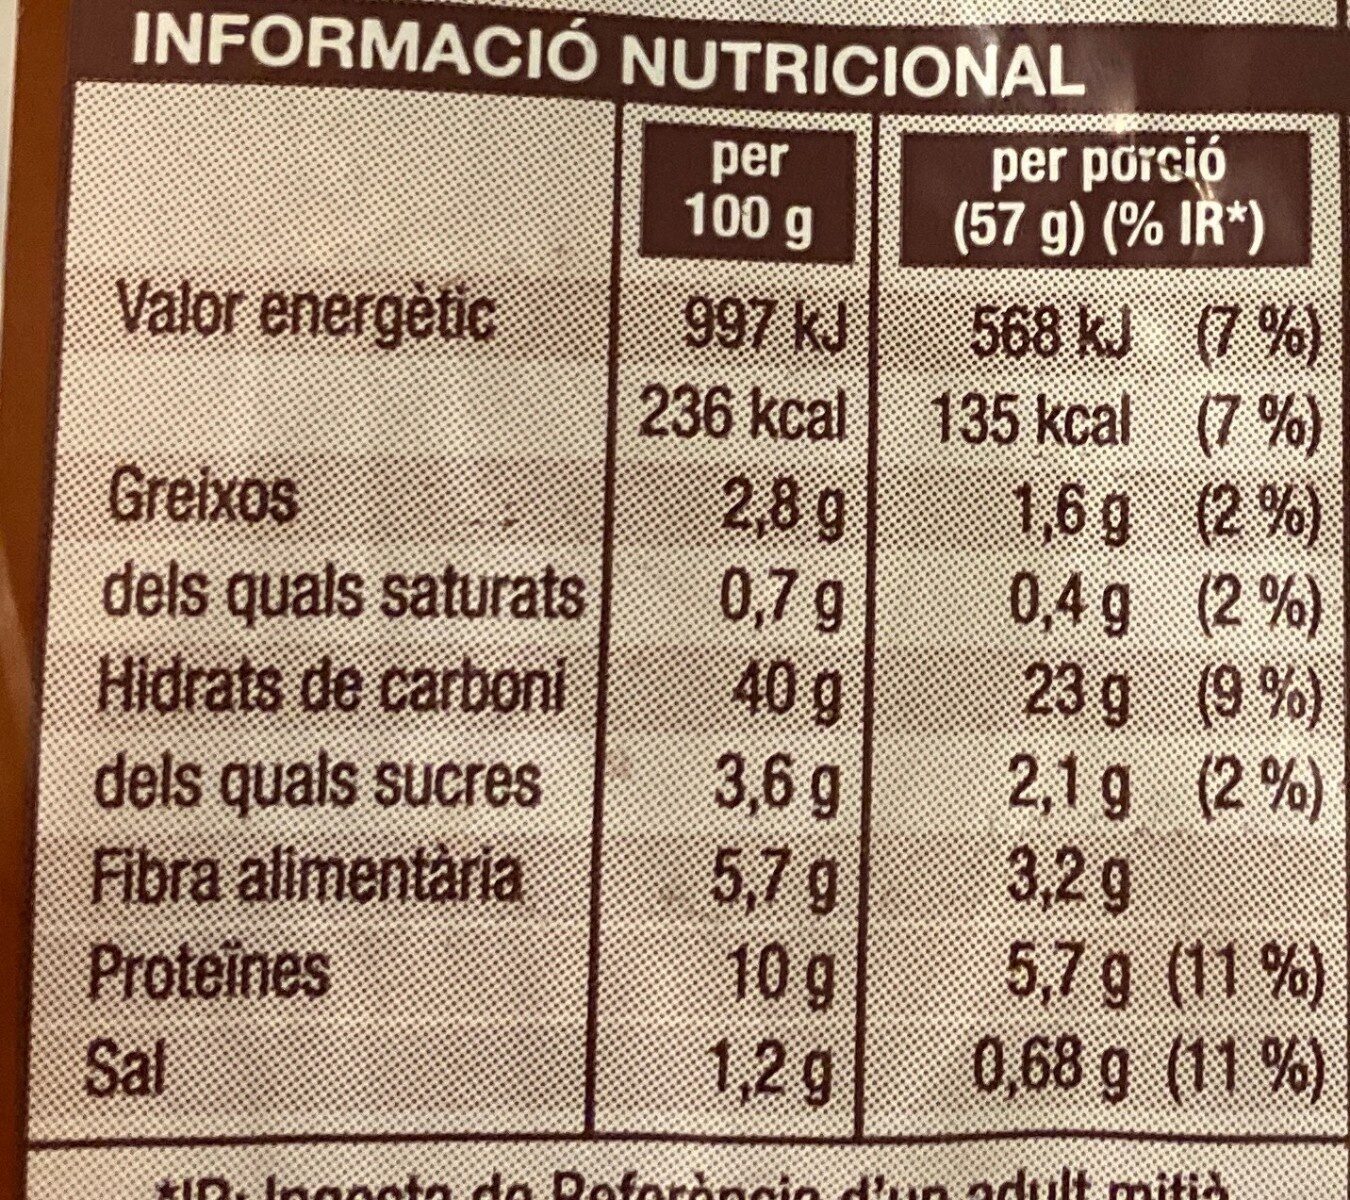 Pa de motlle 100 % integral - Informació nutricional - es